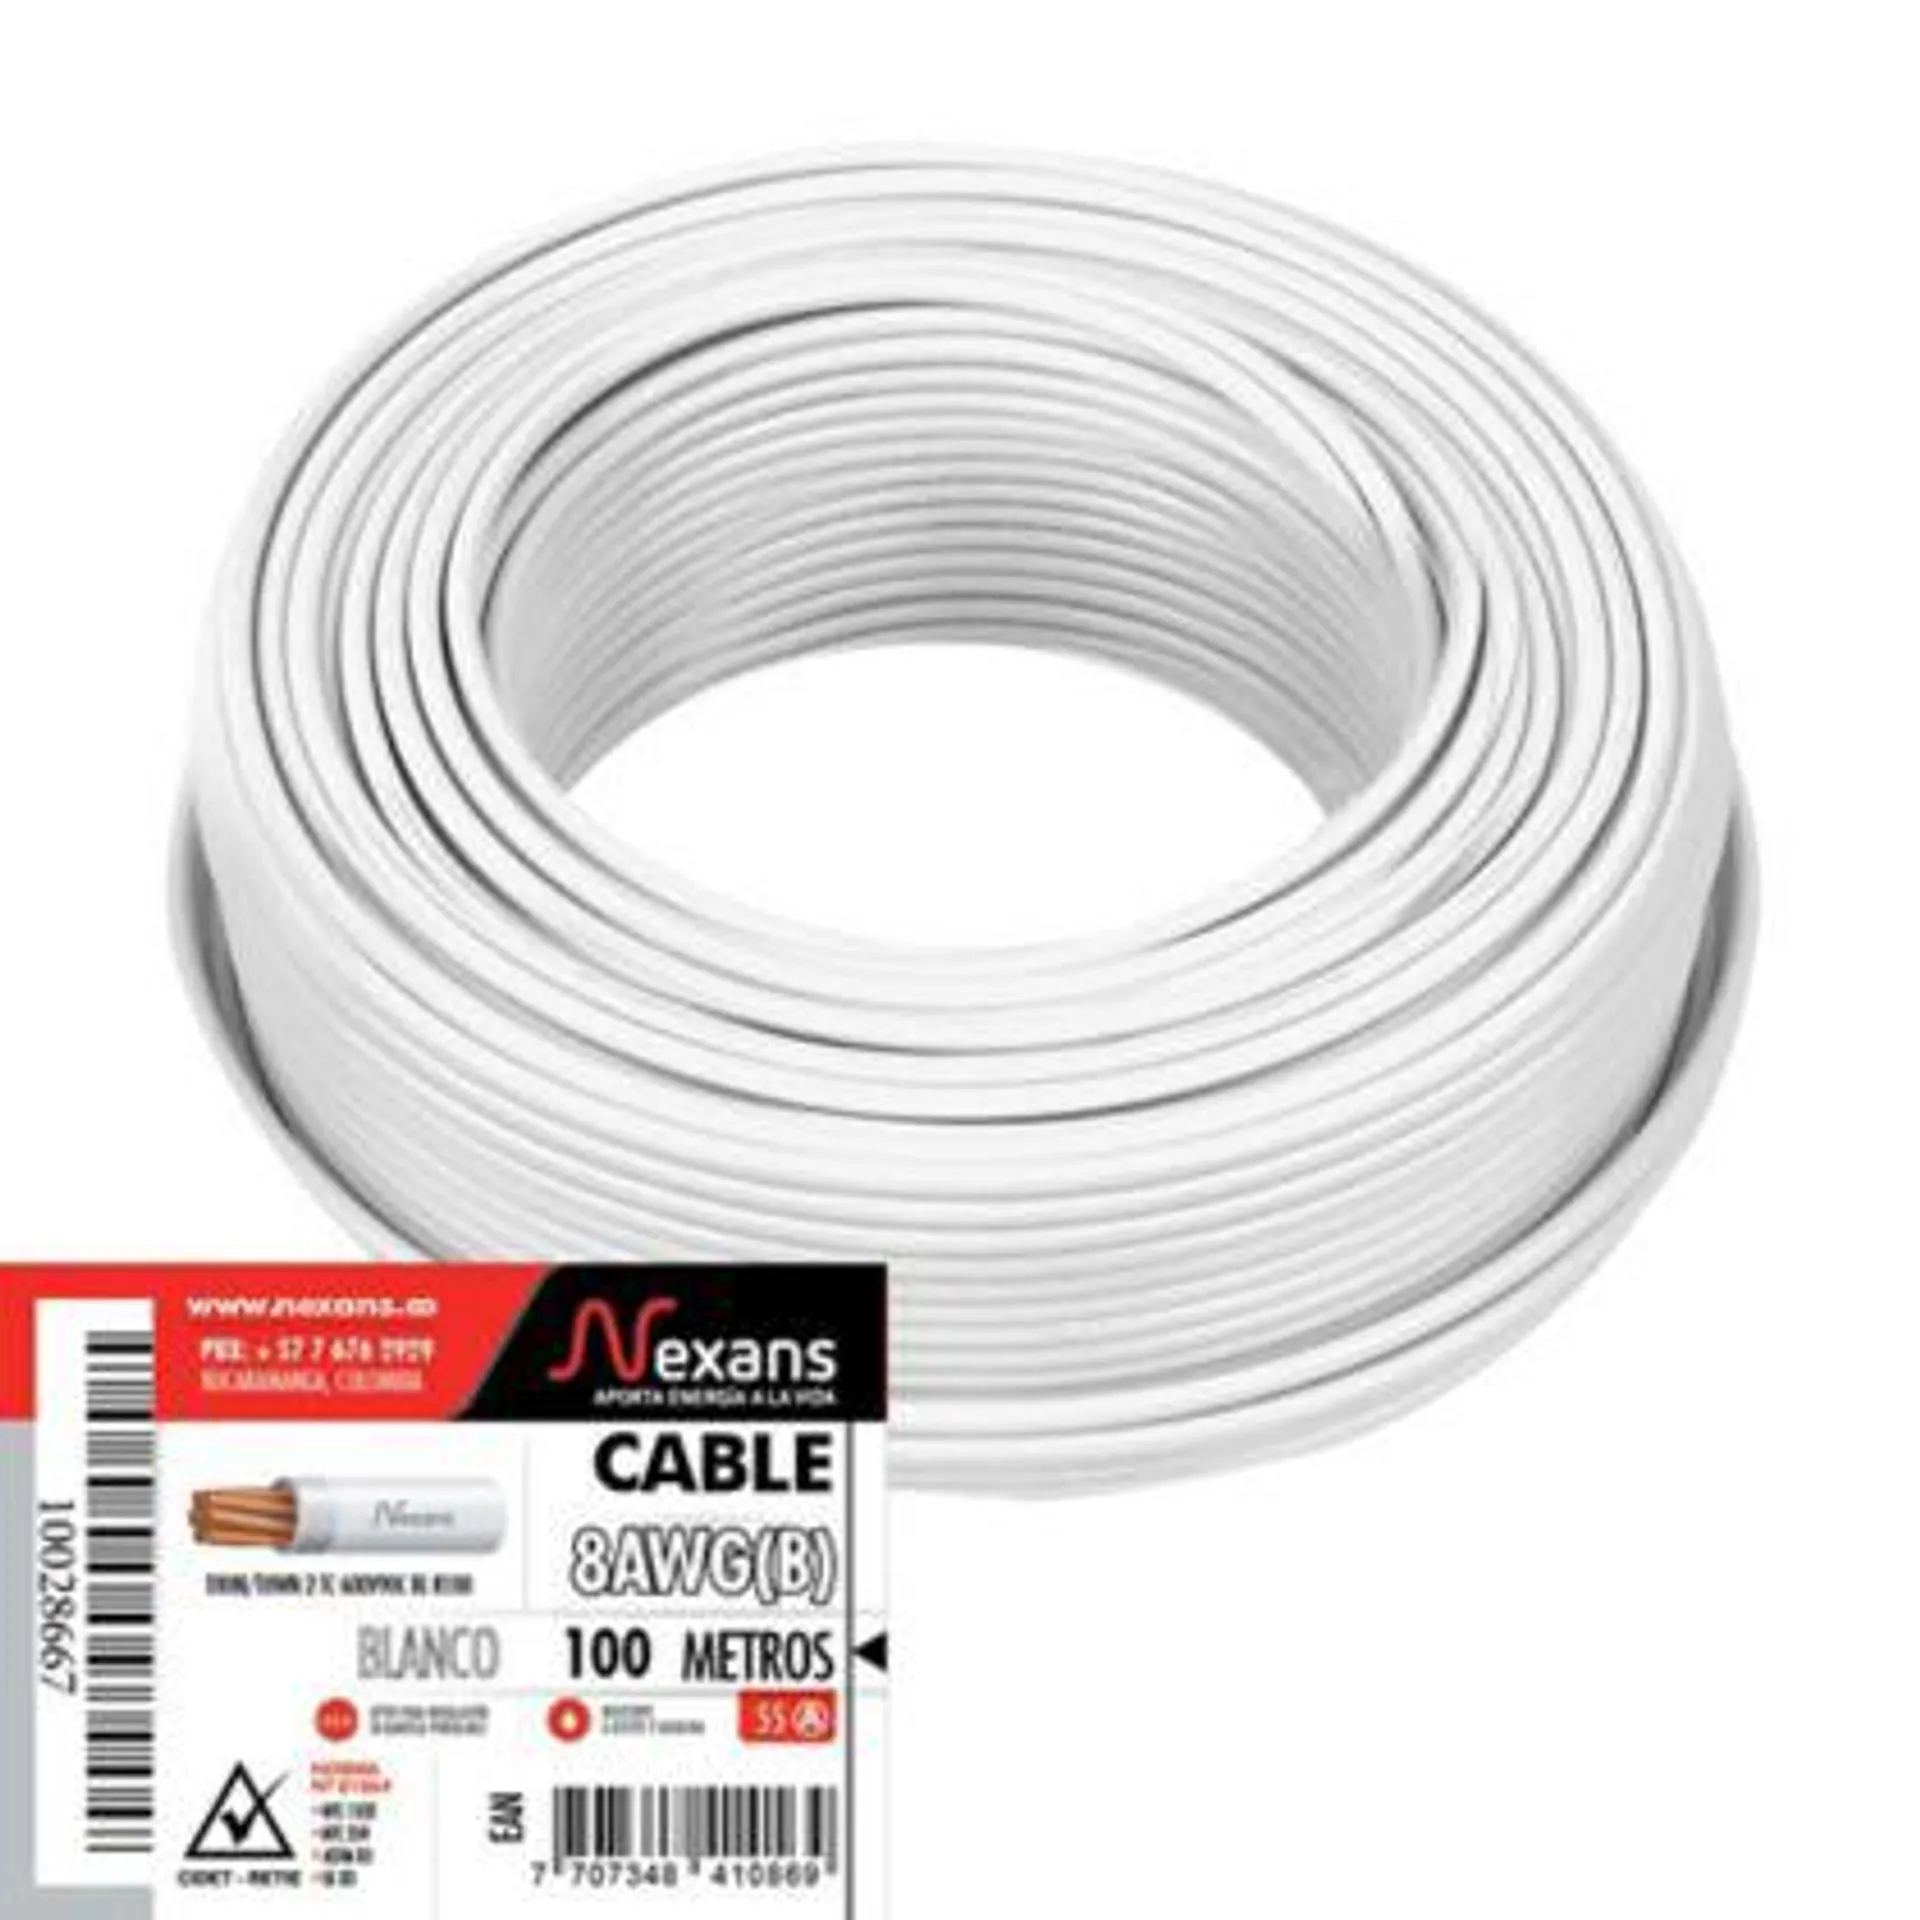 Cable De Cobre #8 Blanco #100M